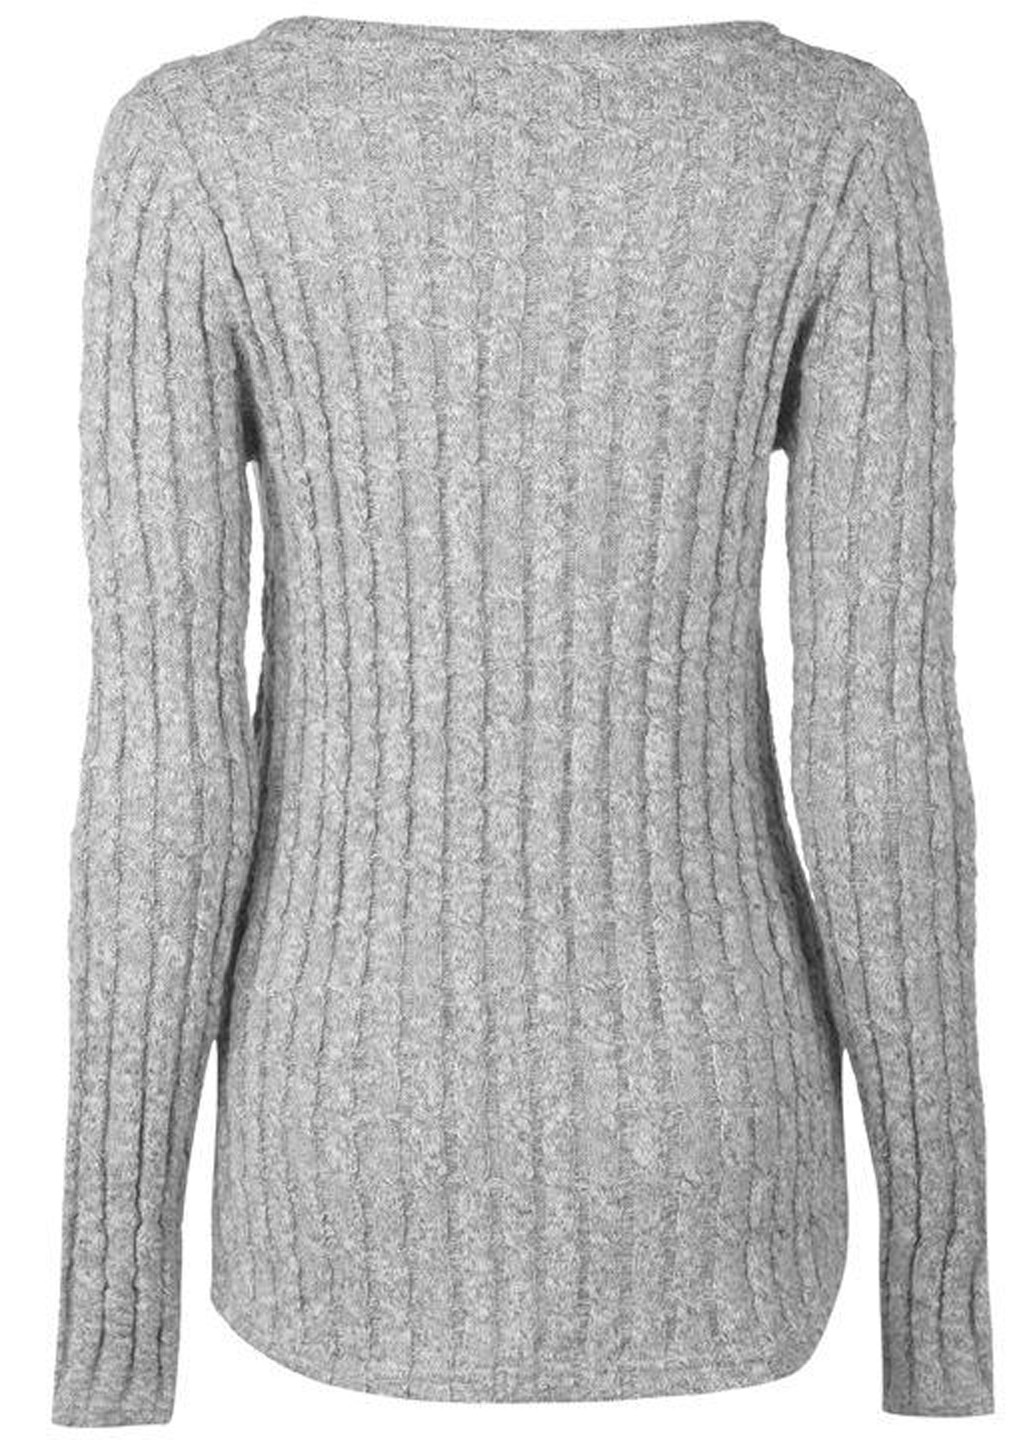 Серый демисезонный пуловер пуловер Firetrap